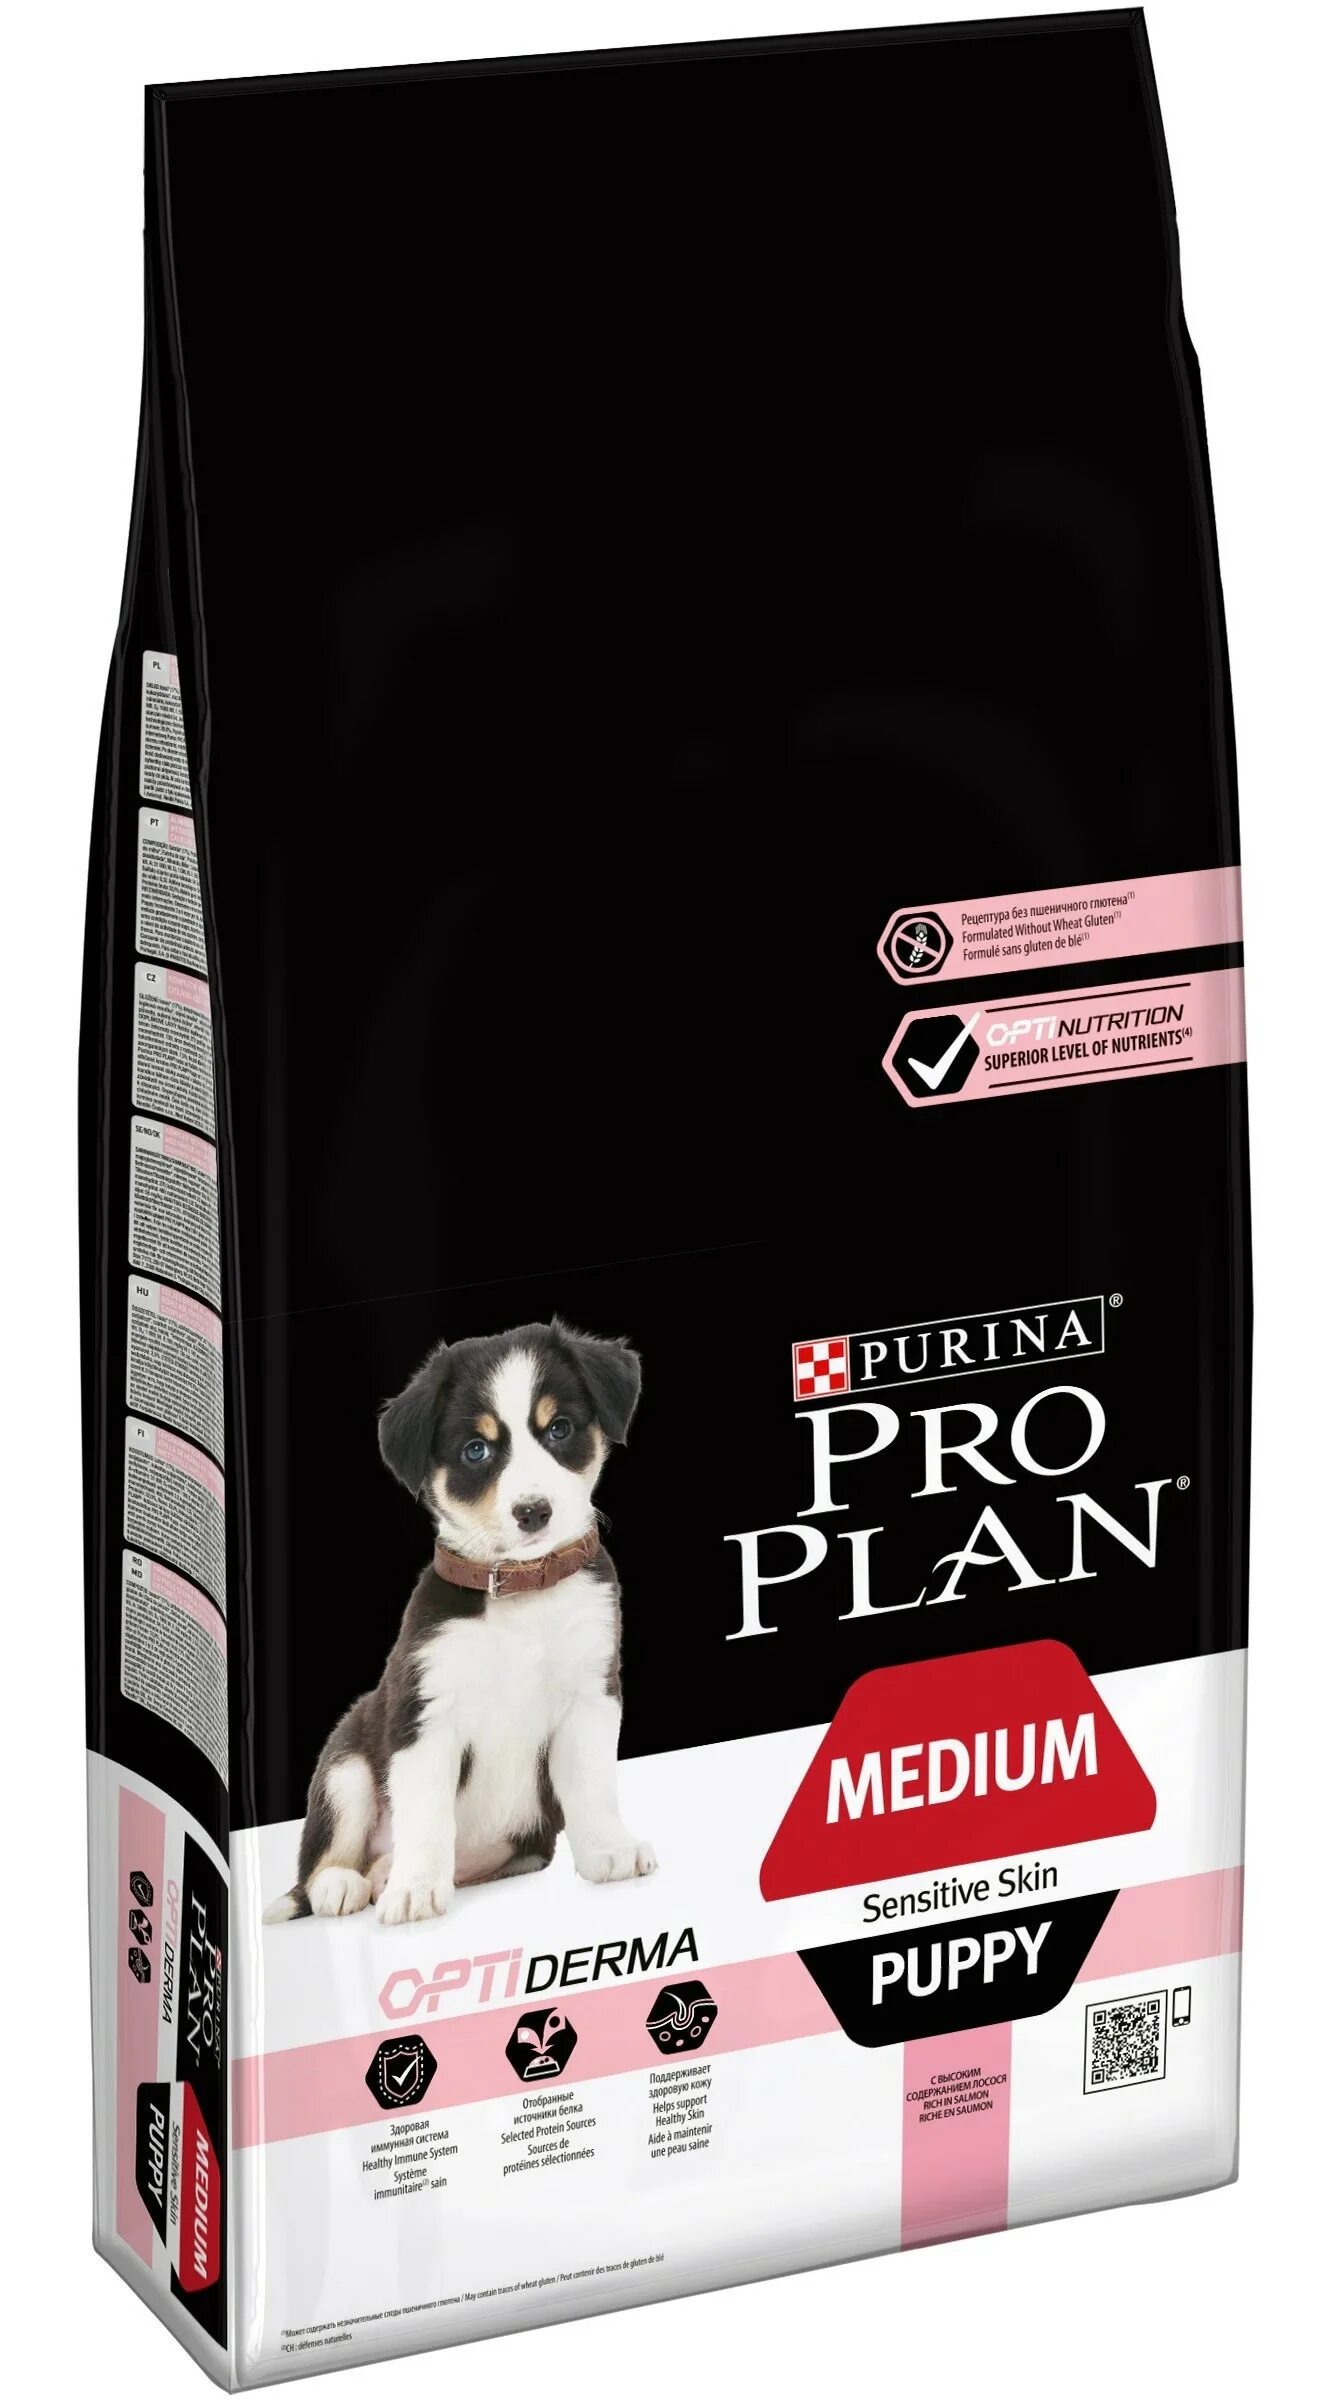 Purina Pro Plan Medium Puppy sensitive Skin. Проплан Медиум Паппи для щенков. Purina Pro Plan OPTIDERMA. Purina Pro Plan OPTIDERMA для собак. Корм pro plan для средних пород